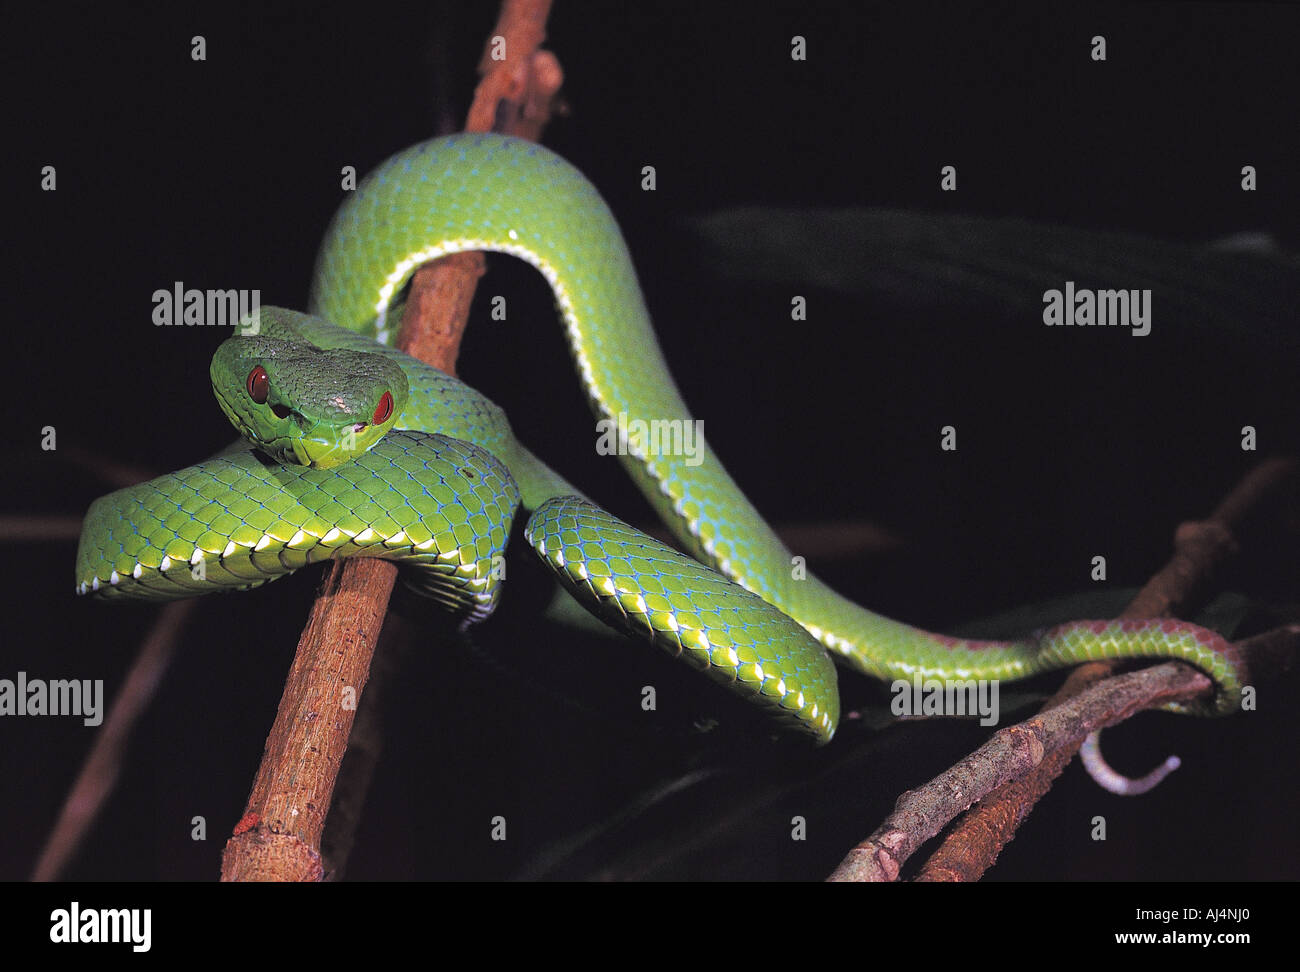 Stejneger viper, Trimeresurus cf. stejnegeri, in Eastern Himalayan rainforest, India. Stock Photo